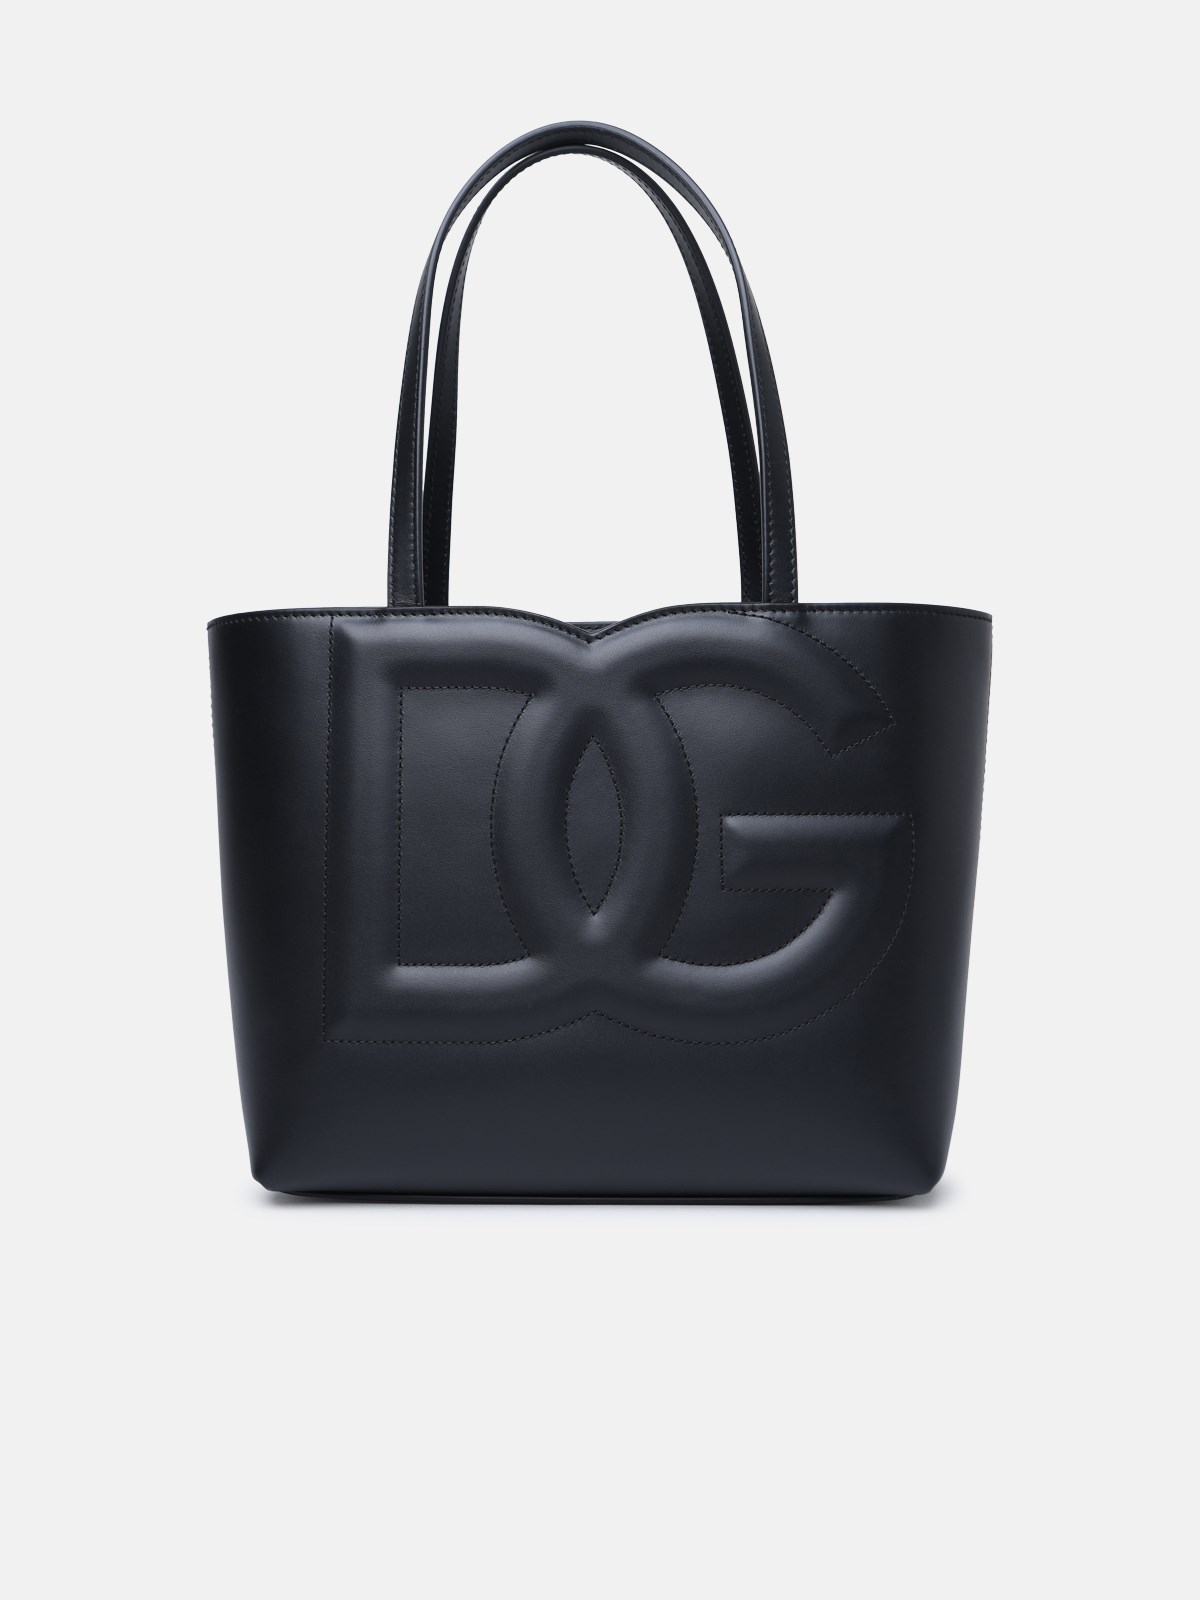 Dolce & Gabbana 'dg' Small Black Calf Leather Shopping Bag